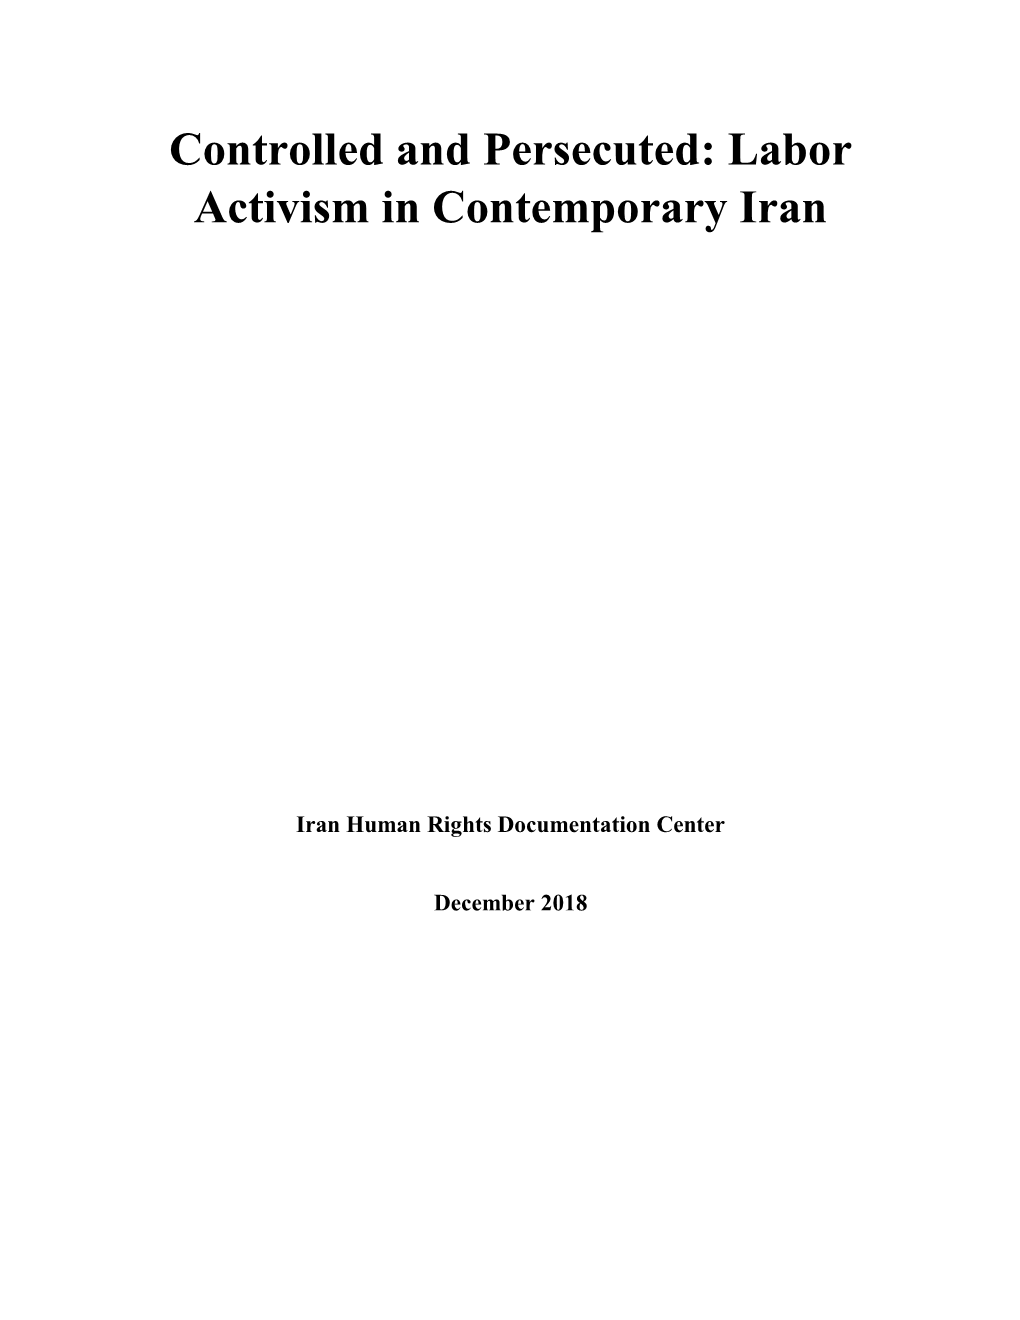 Labor Activism in Contemporary Iran